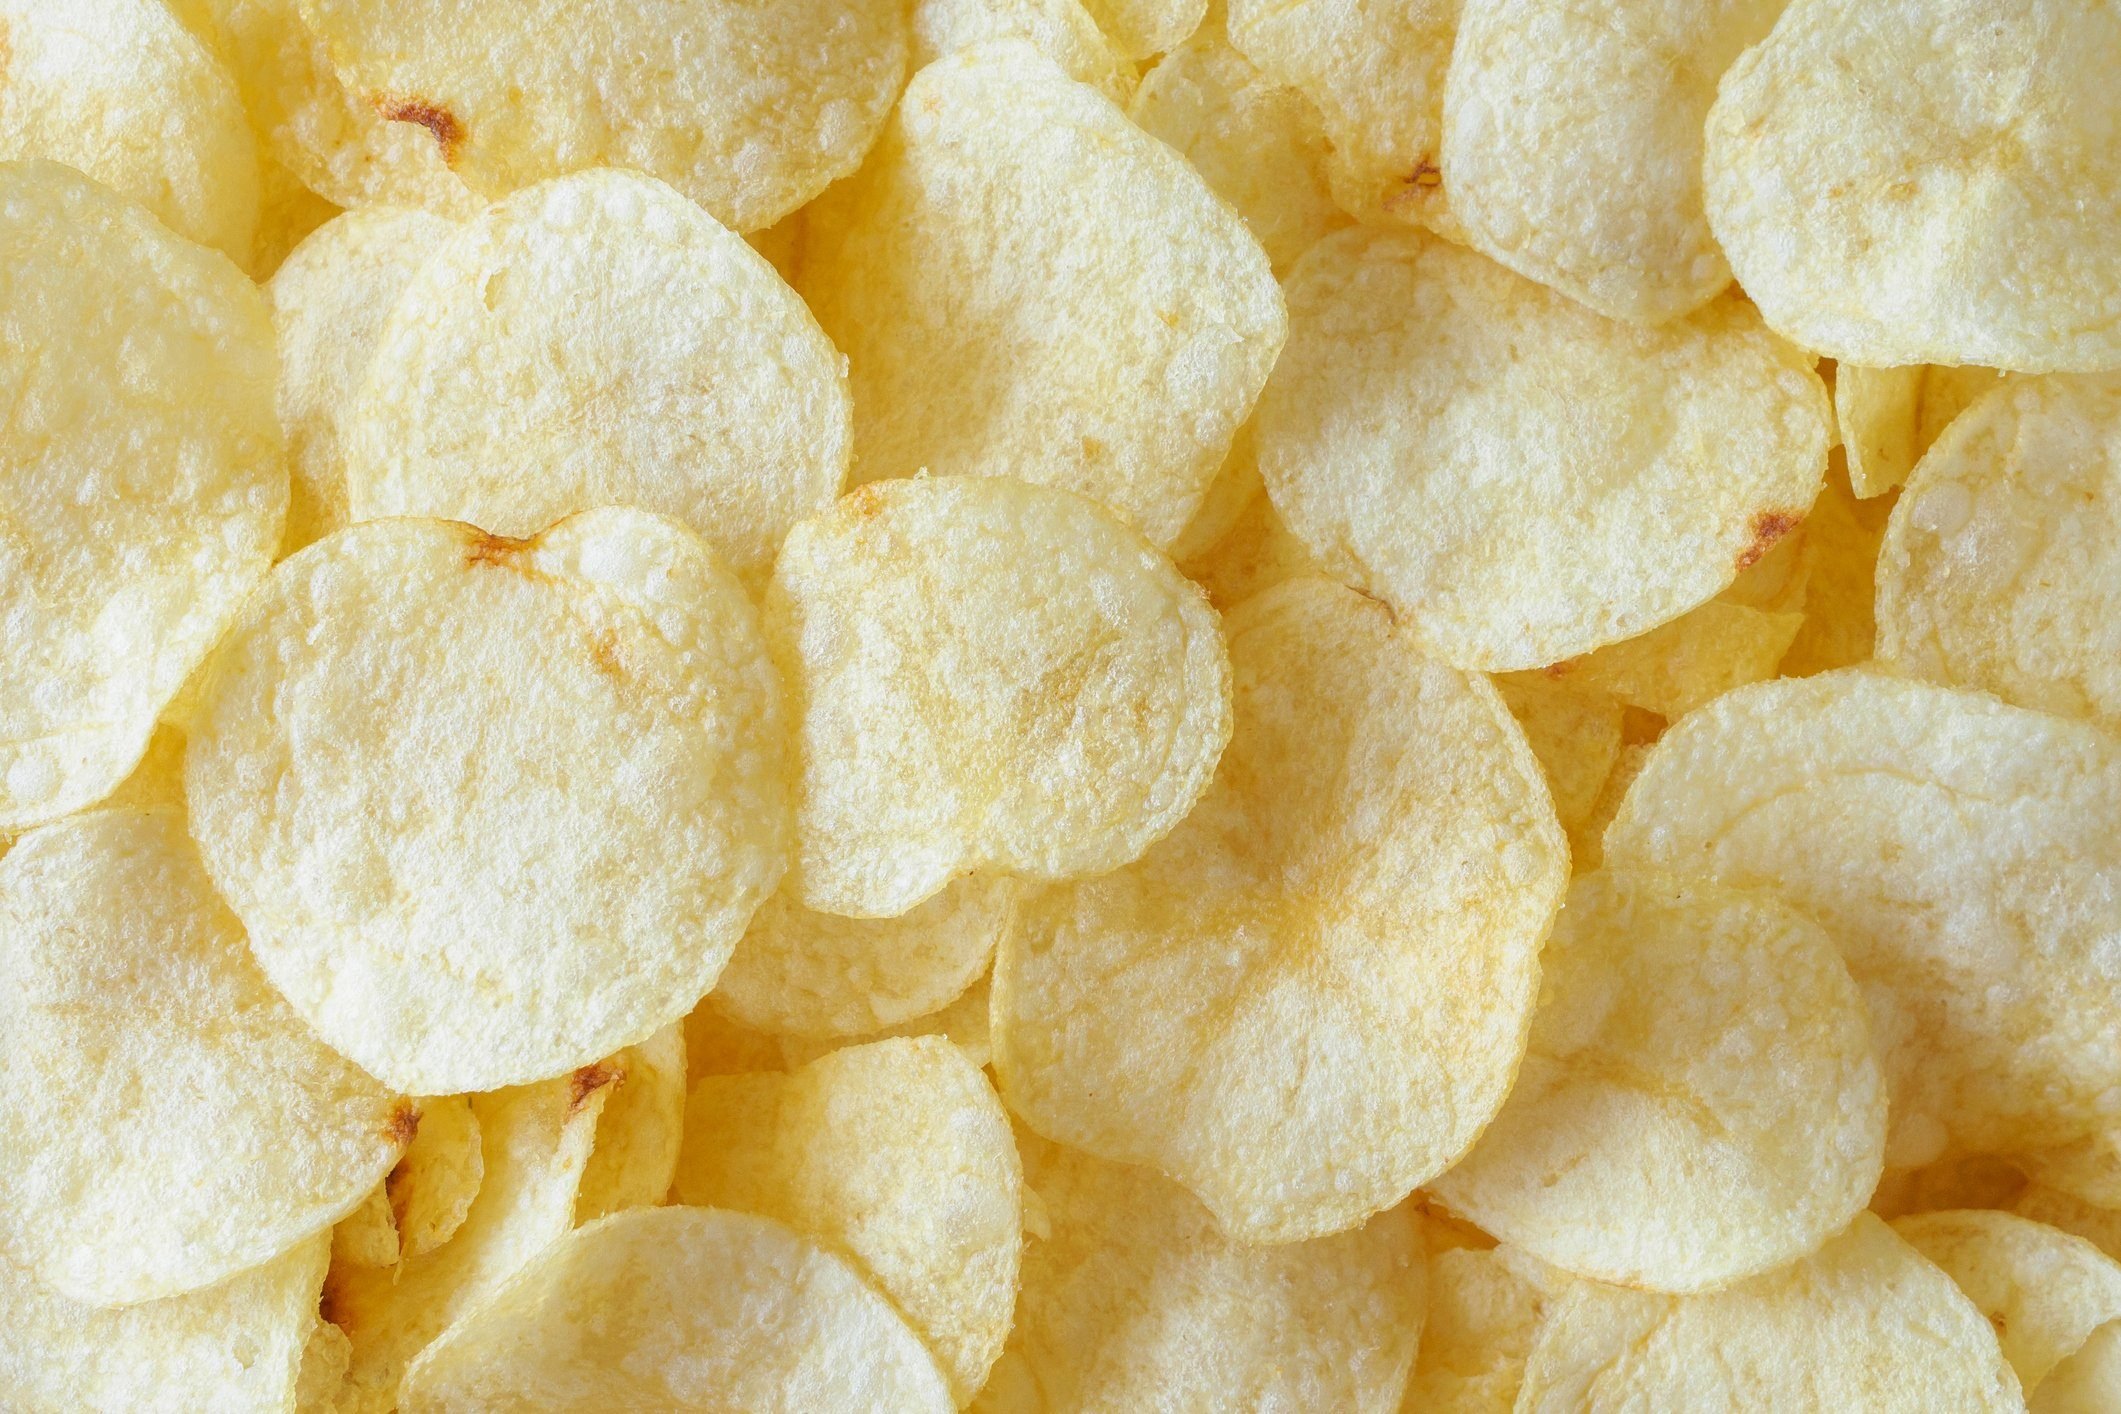 crispy potato chips snack texture background